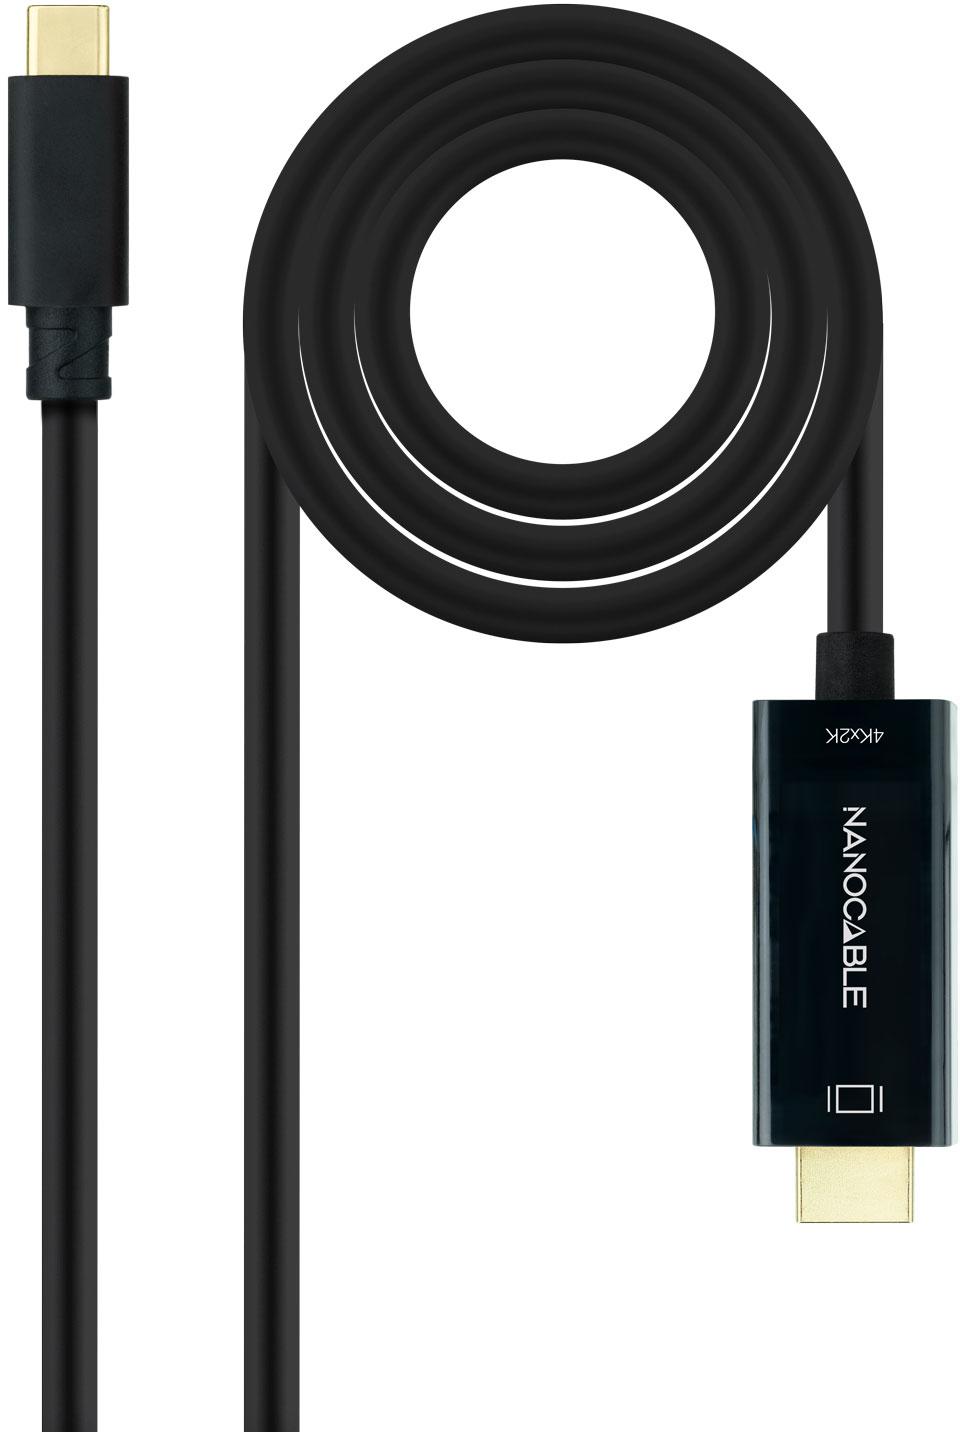 Nanocable - Cable Conversor Nanocable USB-C > HDMI 1.4 4K@30HZ 3 M Negro